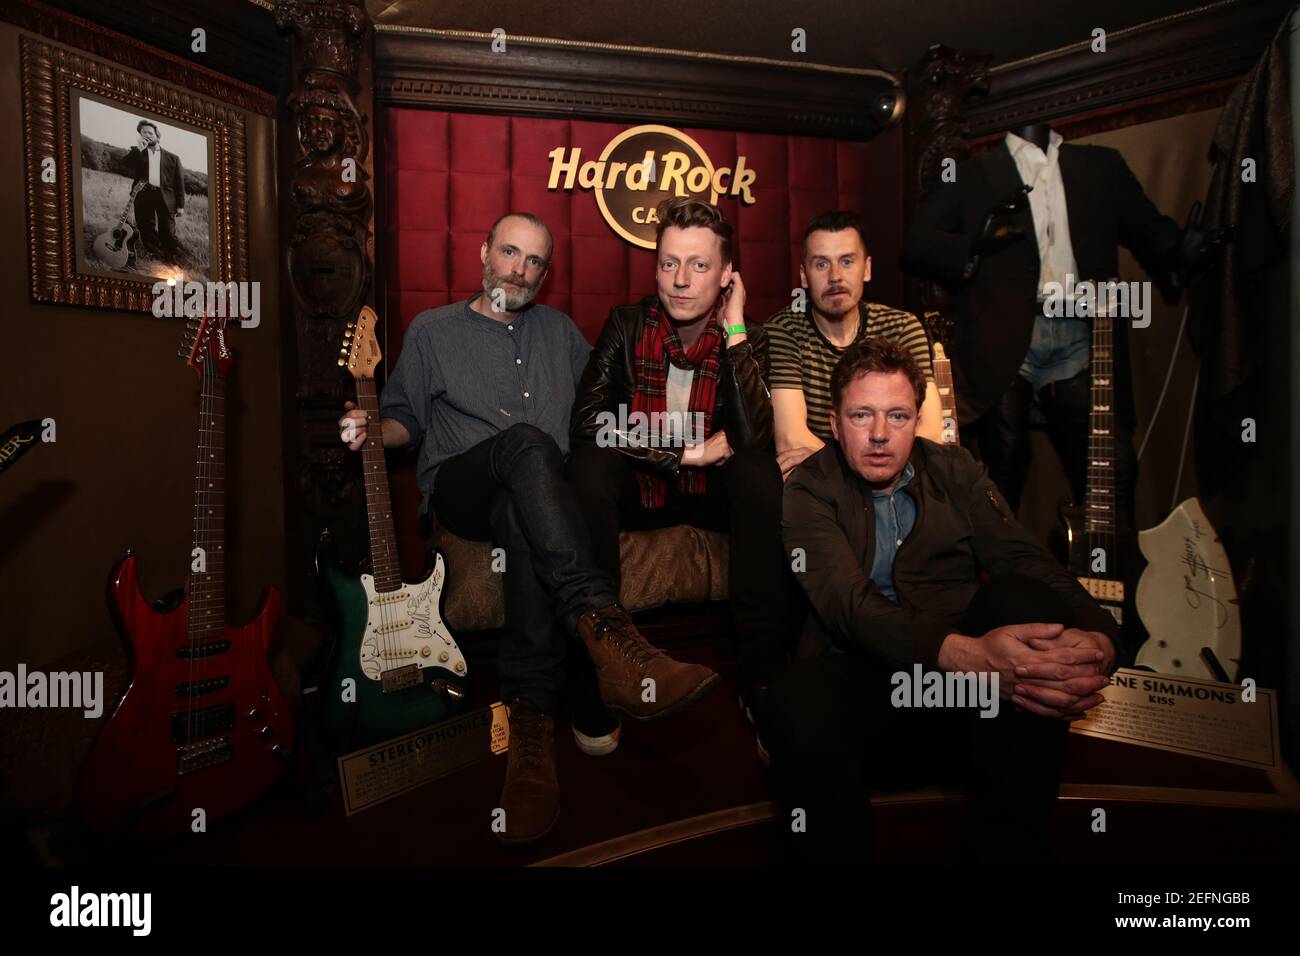 Hard rock cafe photos hi-res stock photography and images - Alamy